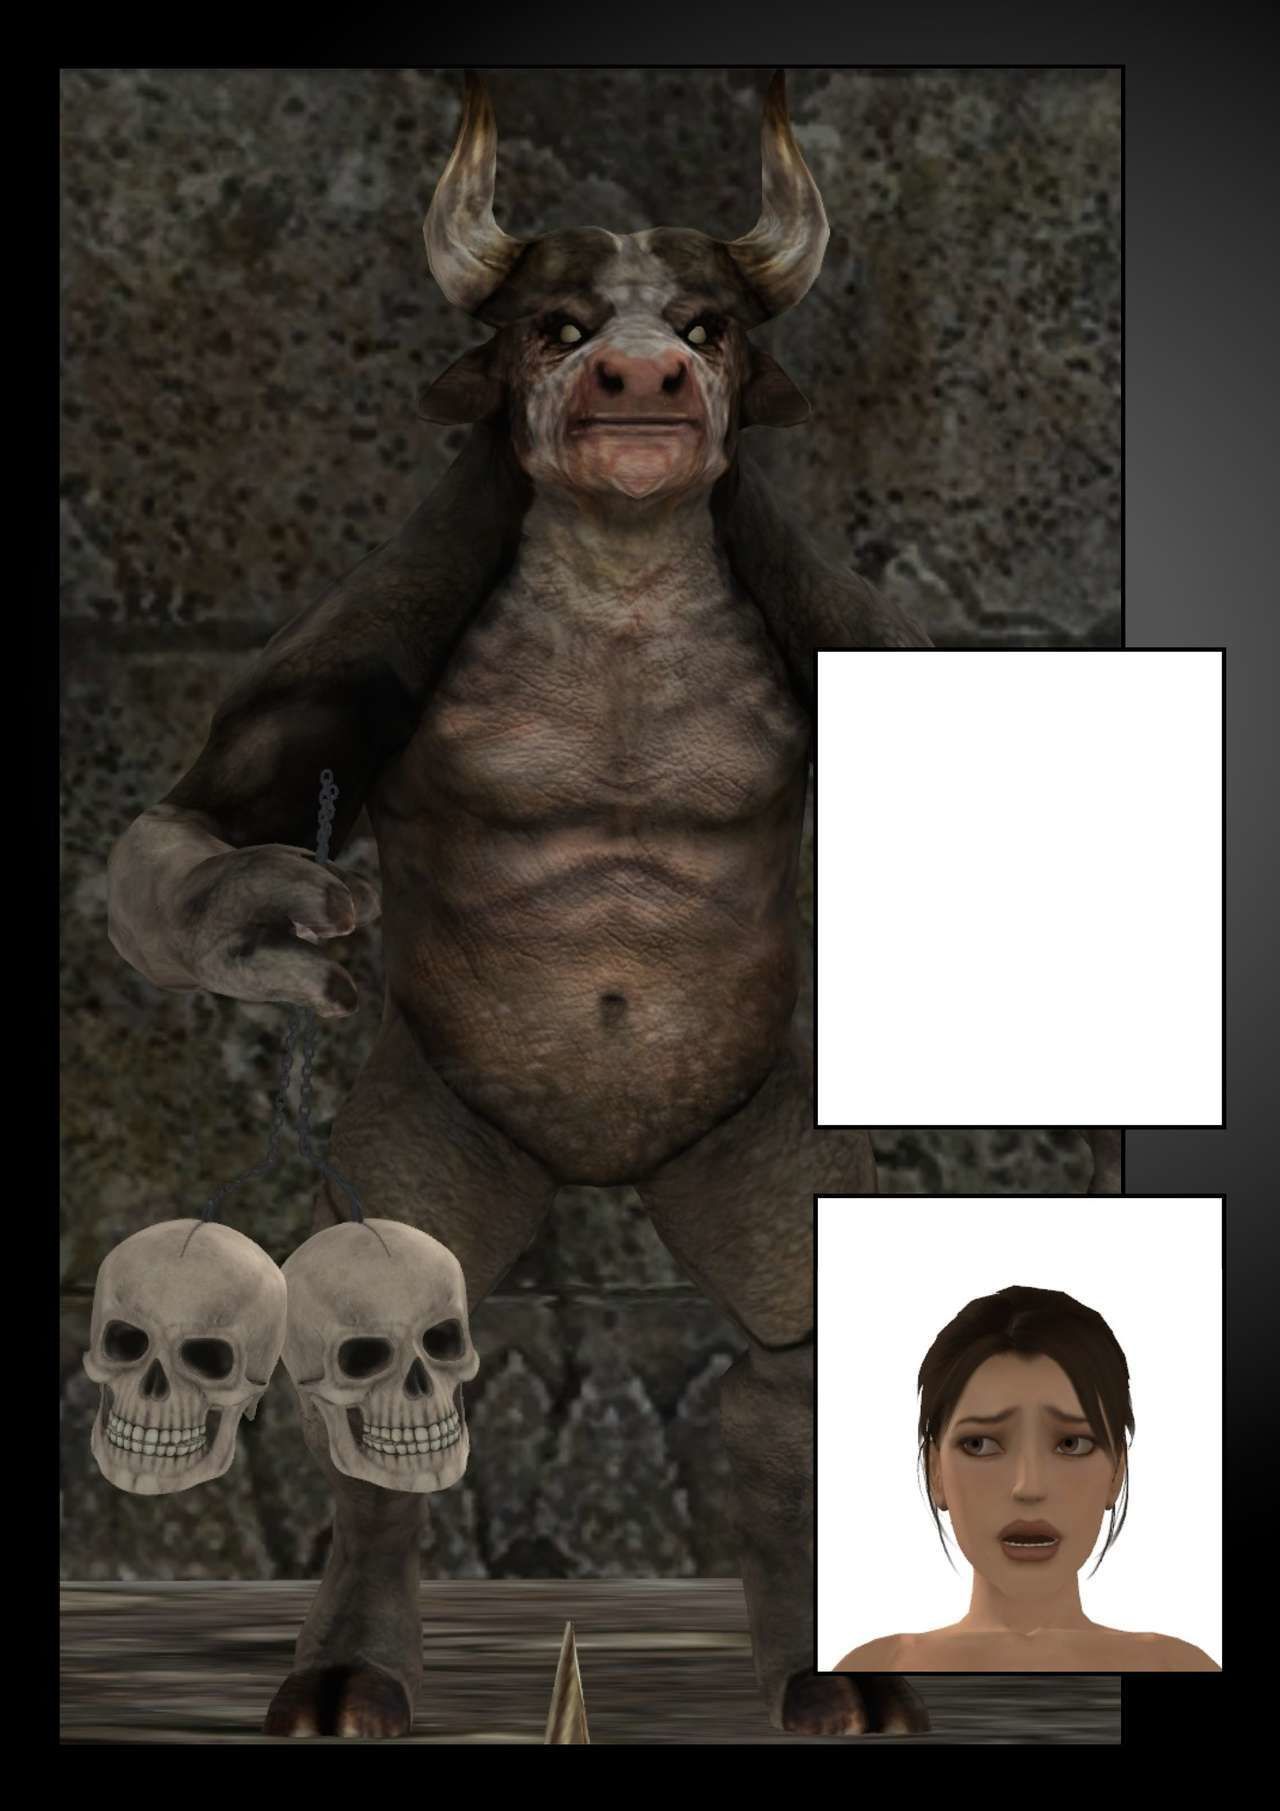 Lara Croft vs die minotaurus w.i.p.